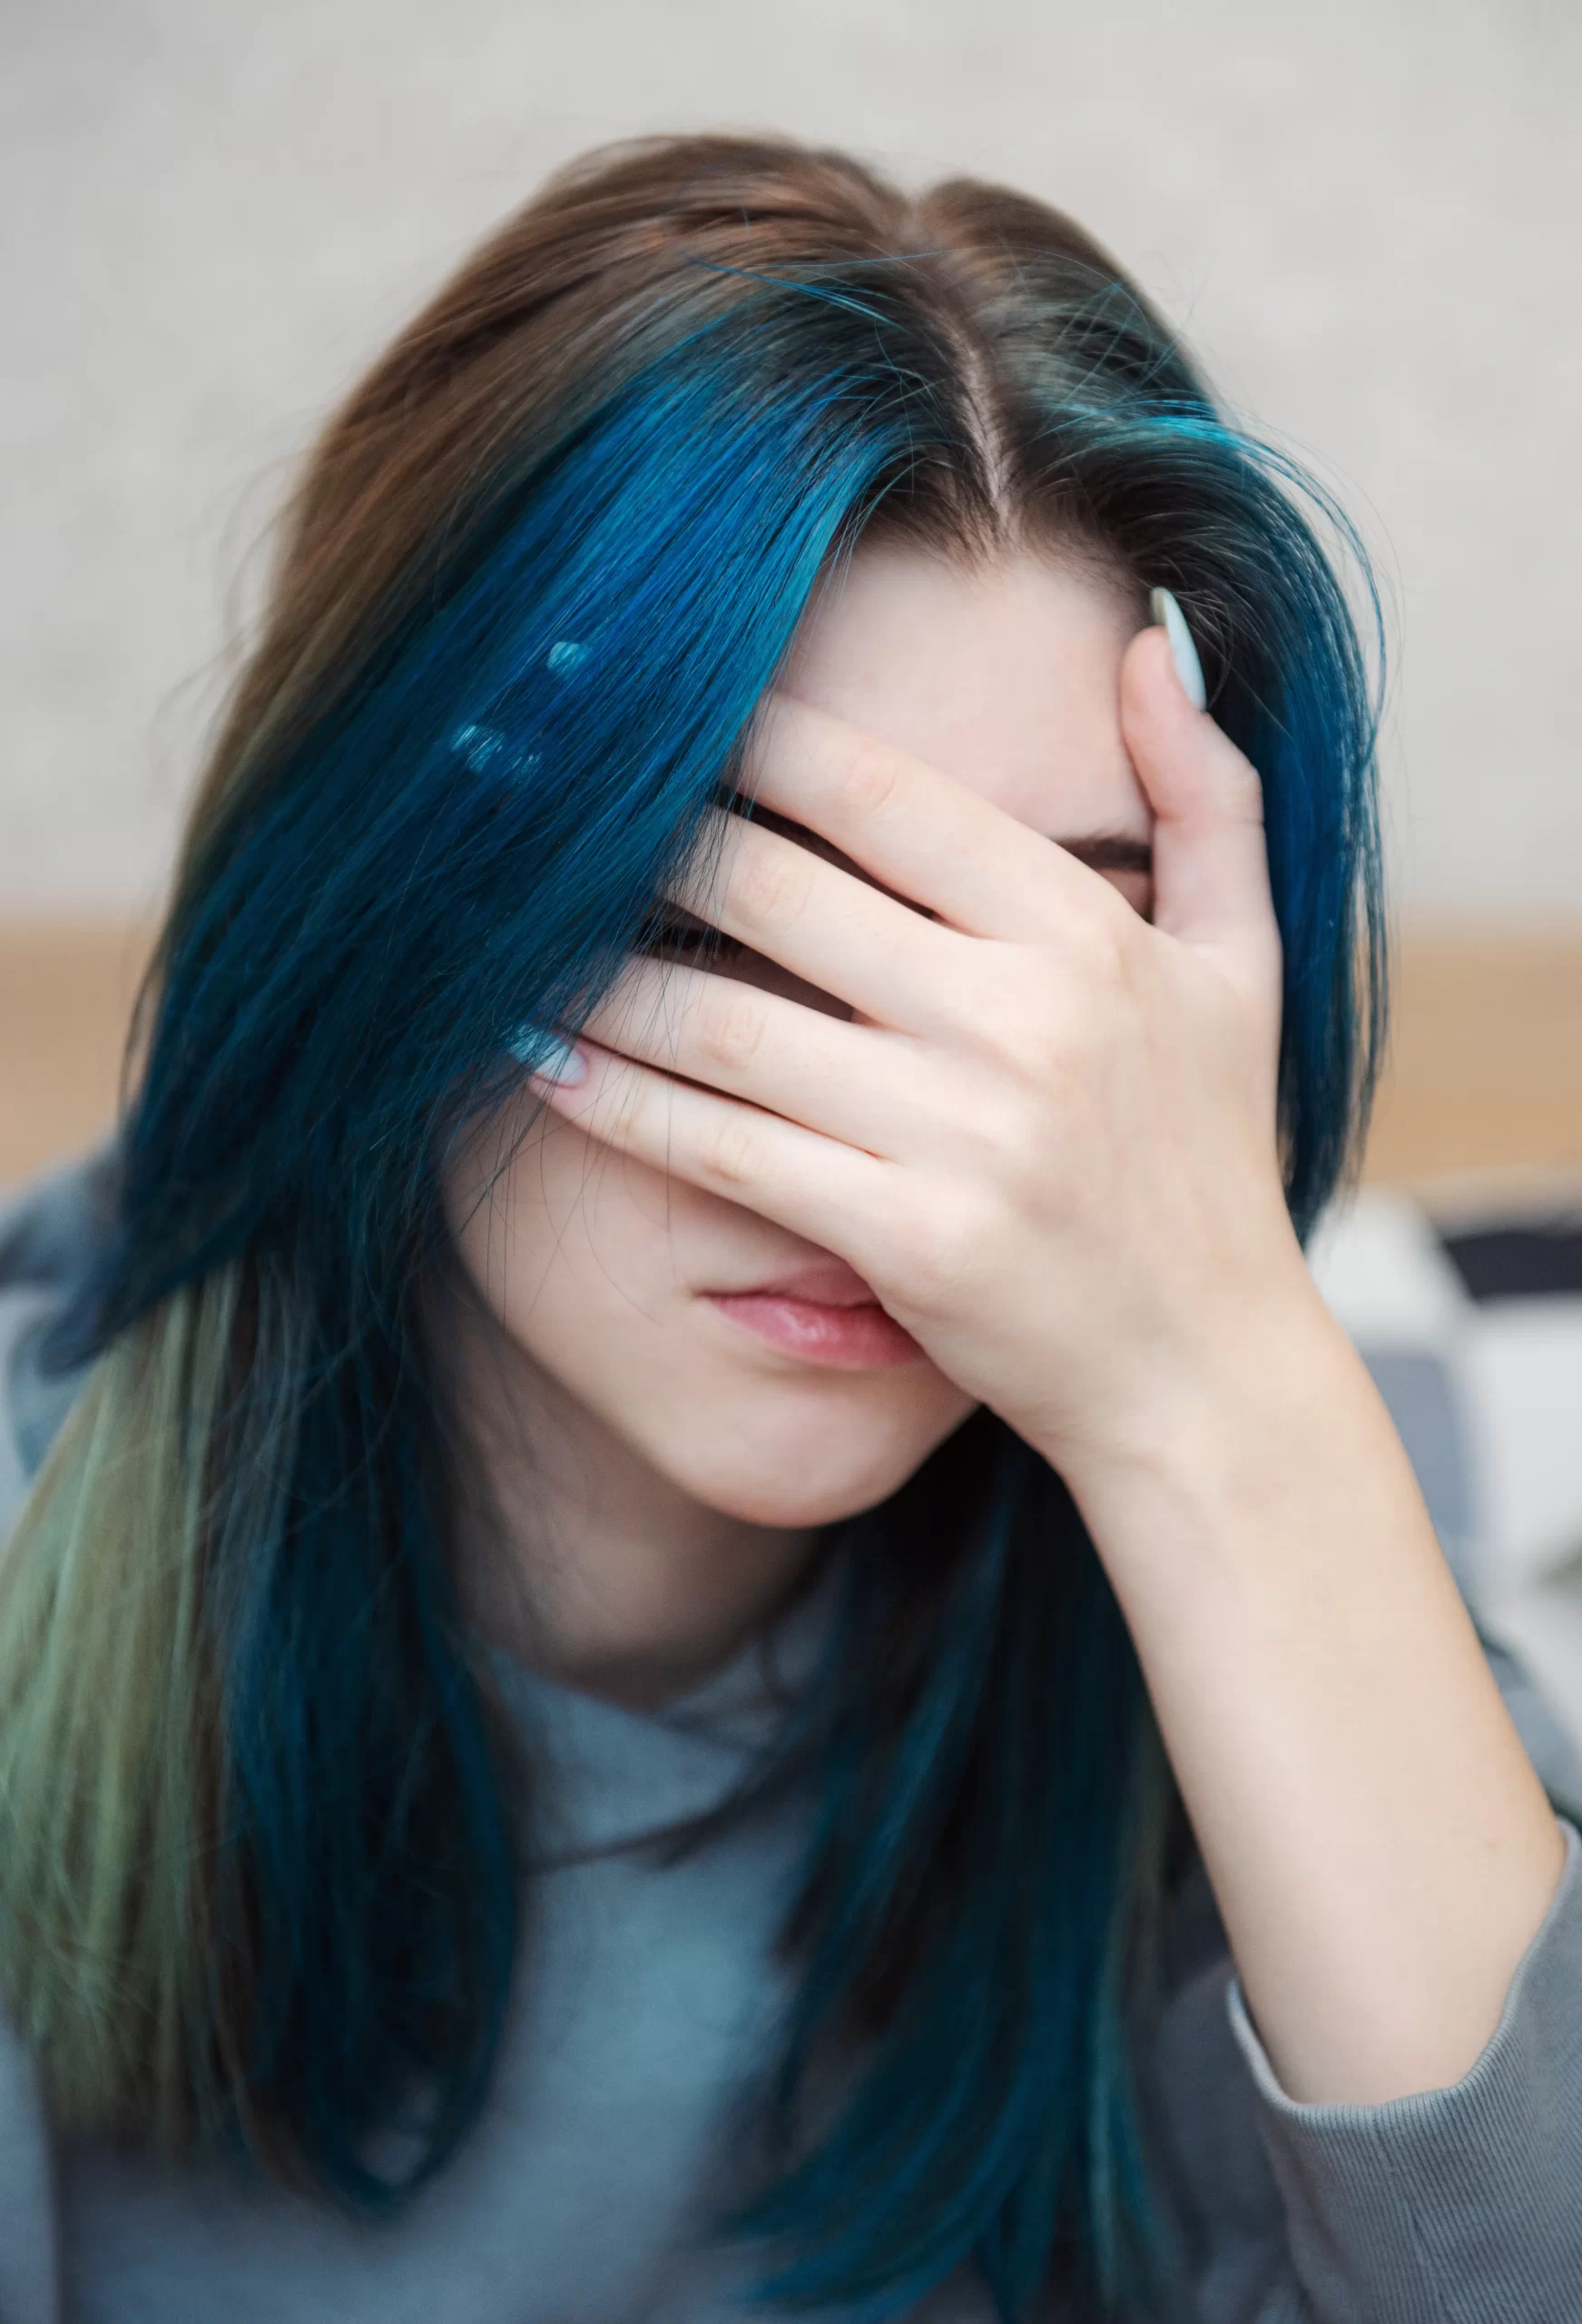 blue hair dye